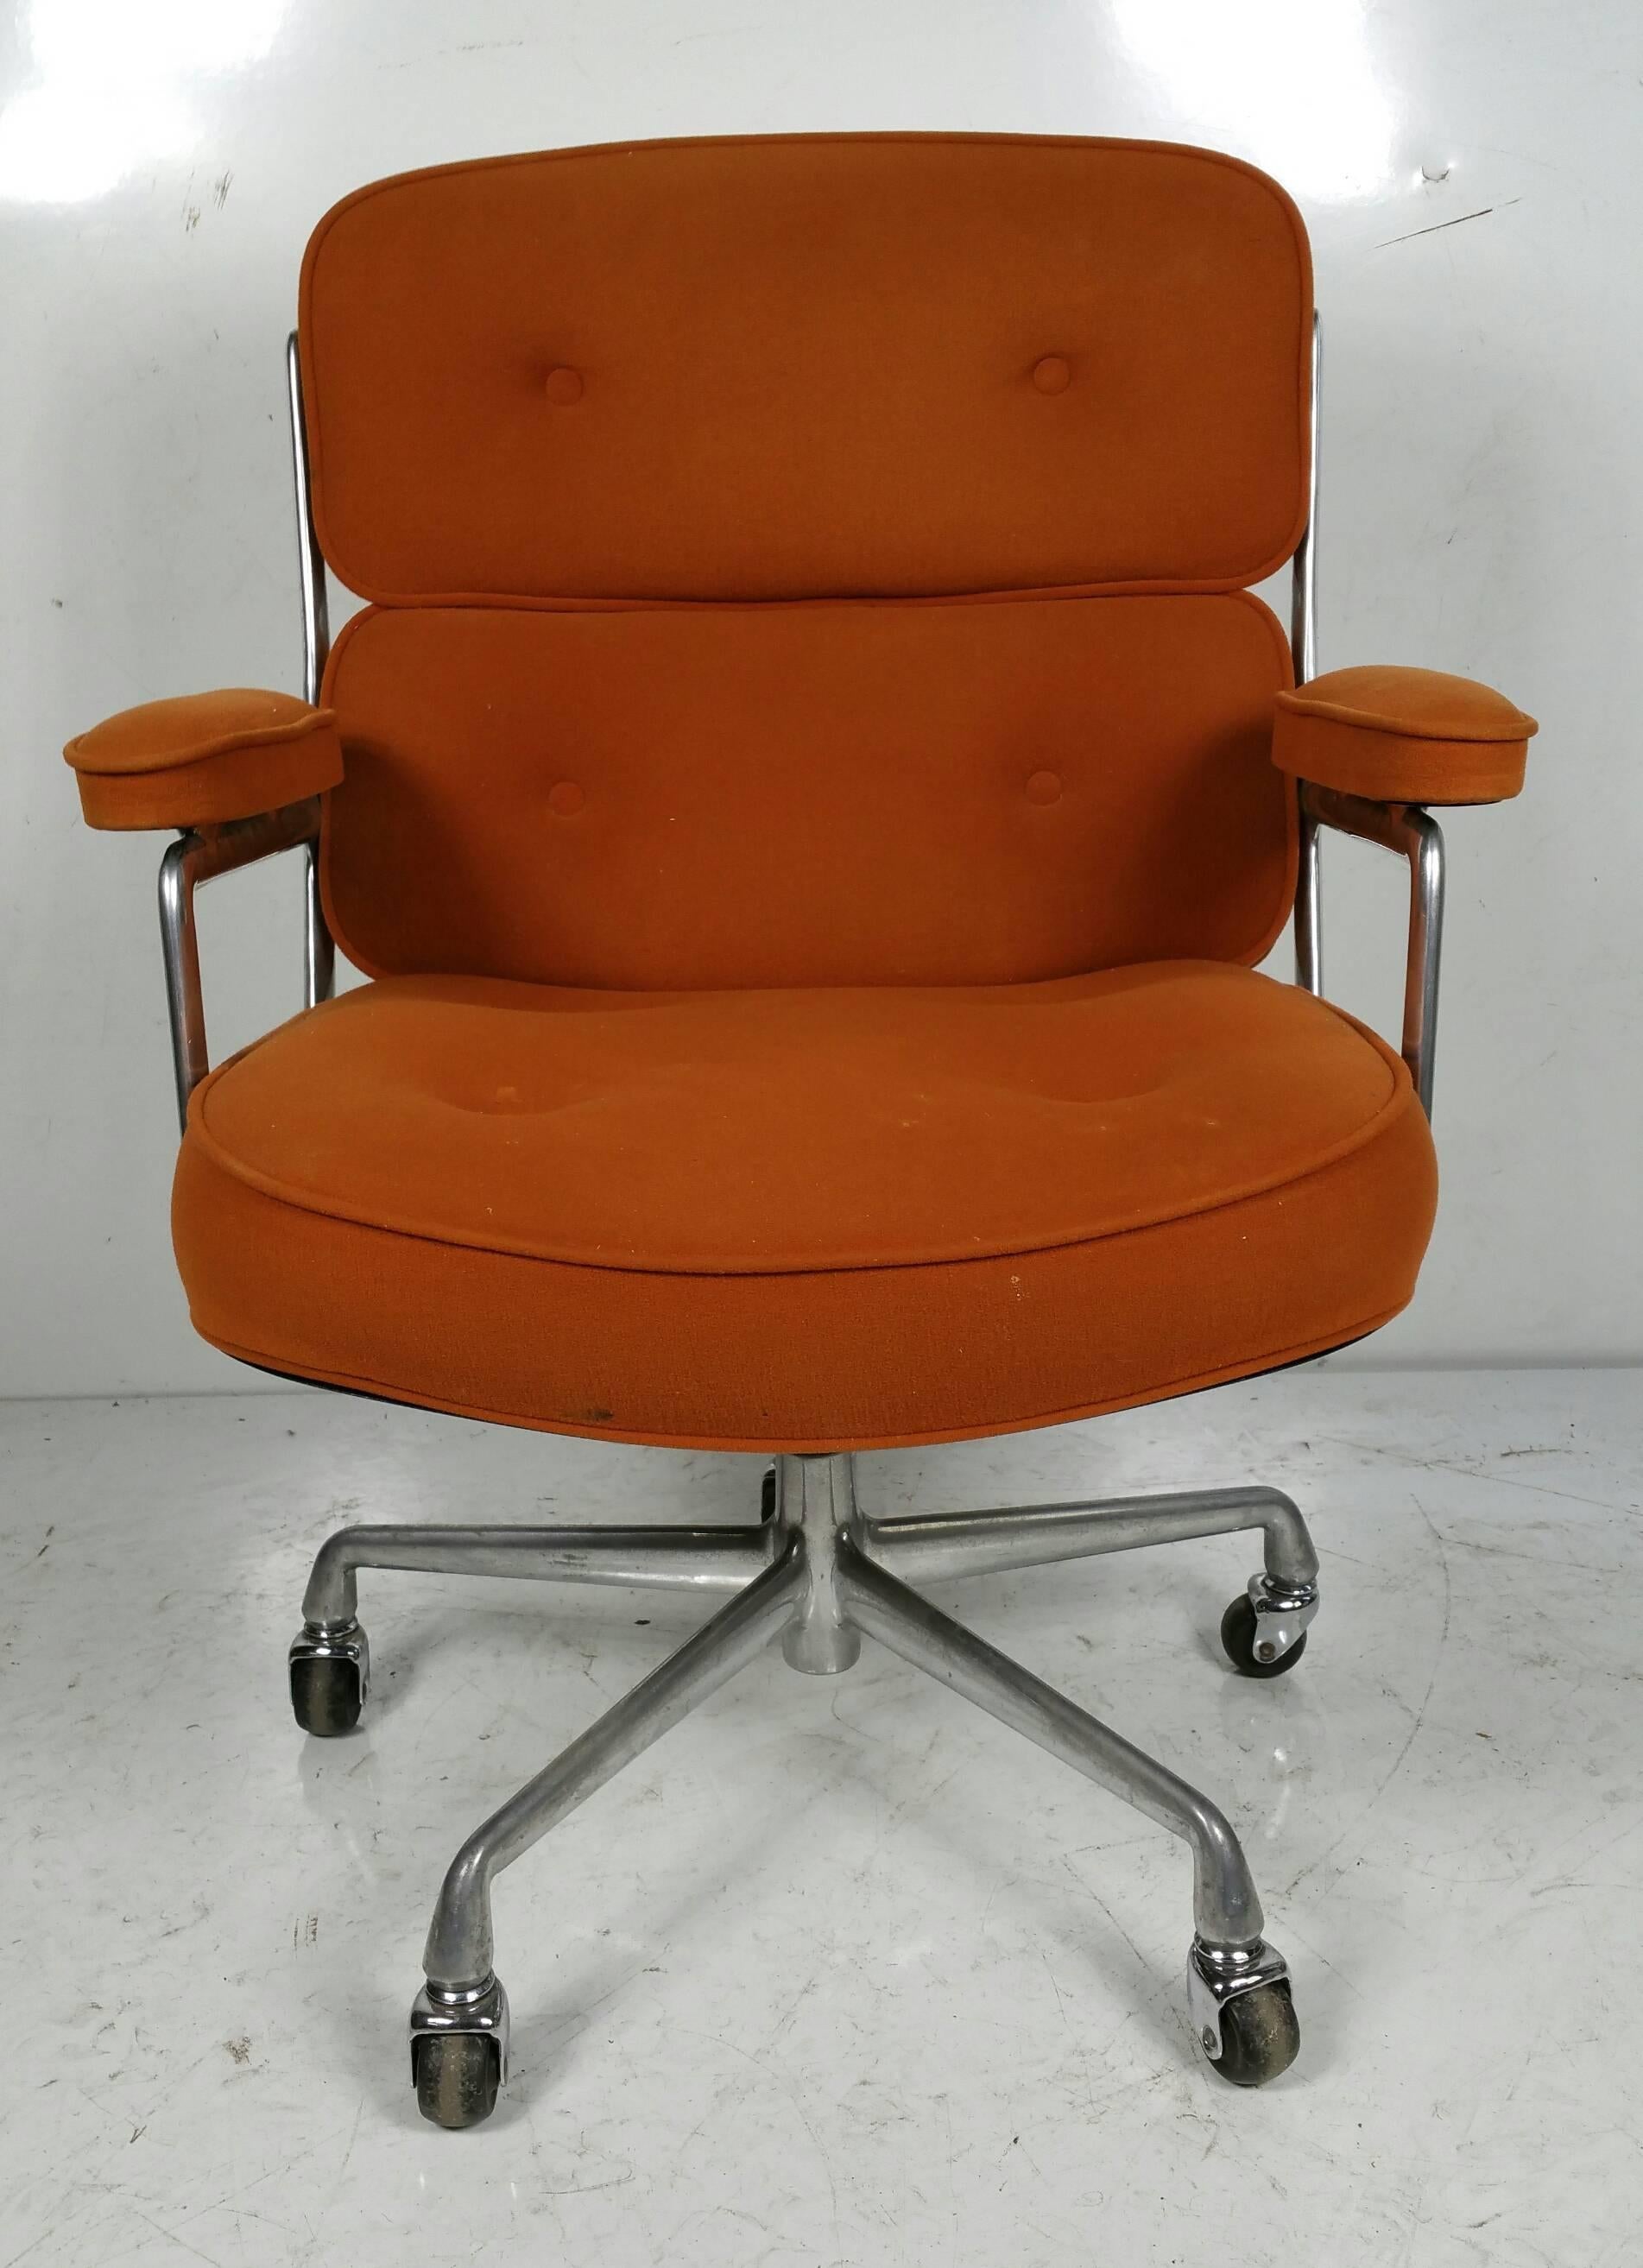 Charles and Ray Eames Time Life Chair,, Original tangerine cotton felt fabric,,  5 star base with castors,, Tilt,swivel mechanism,,adjustable height,,Cast aluminum frame.